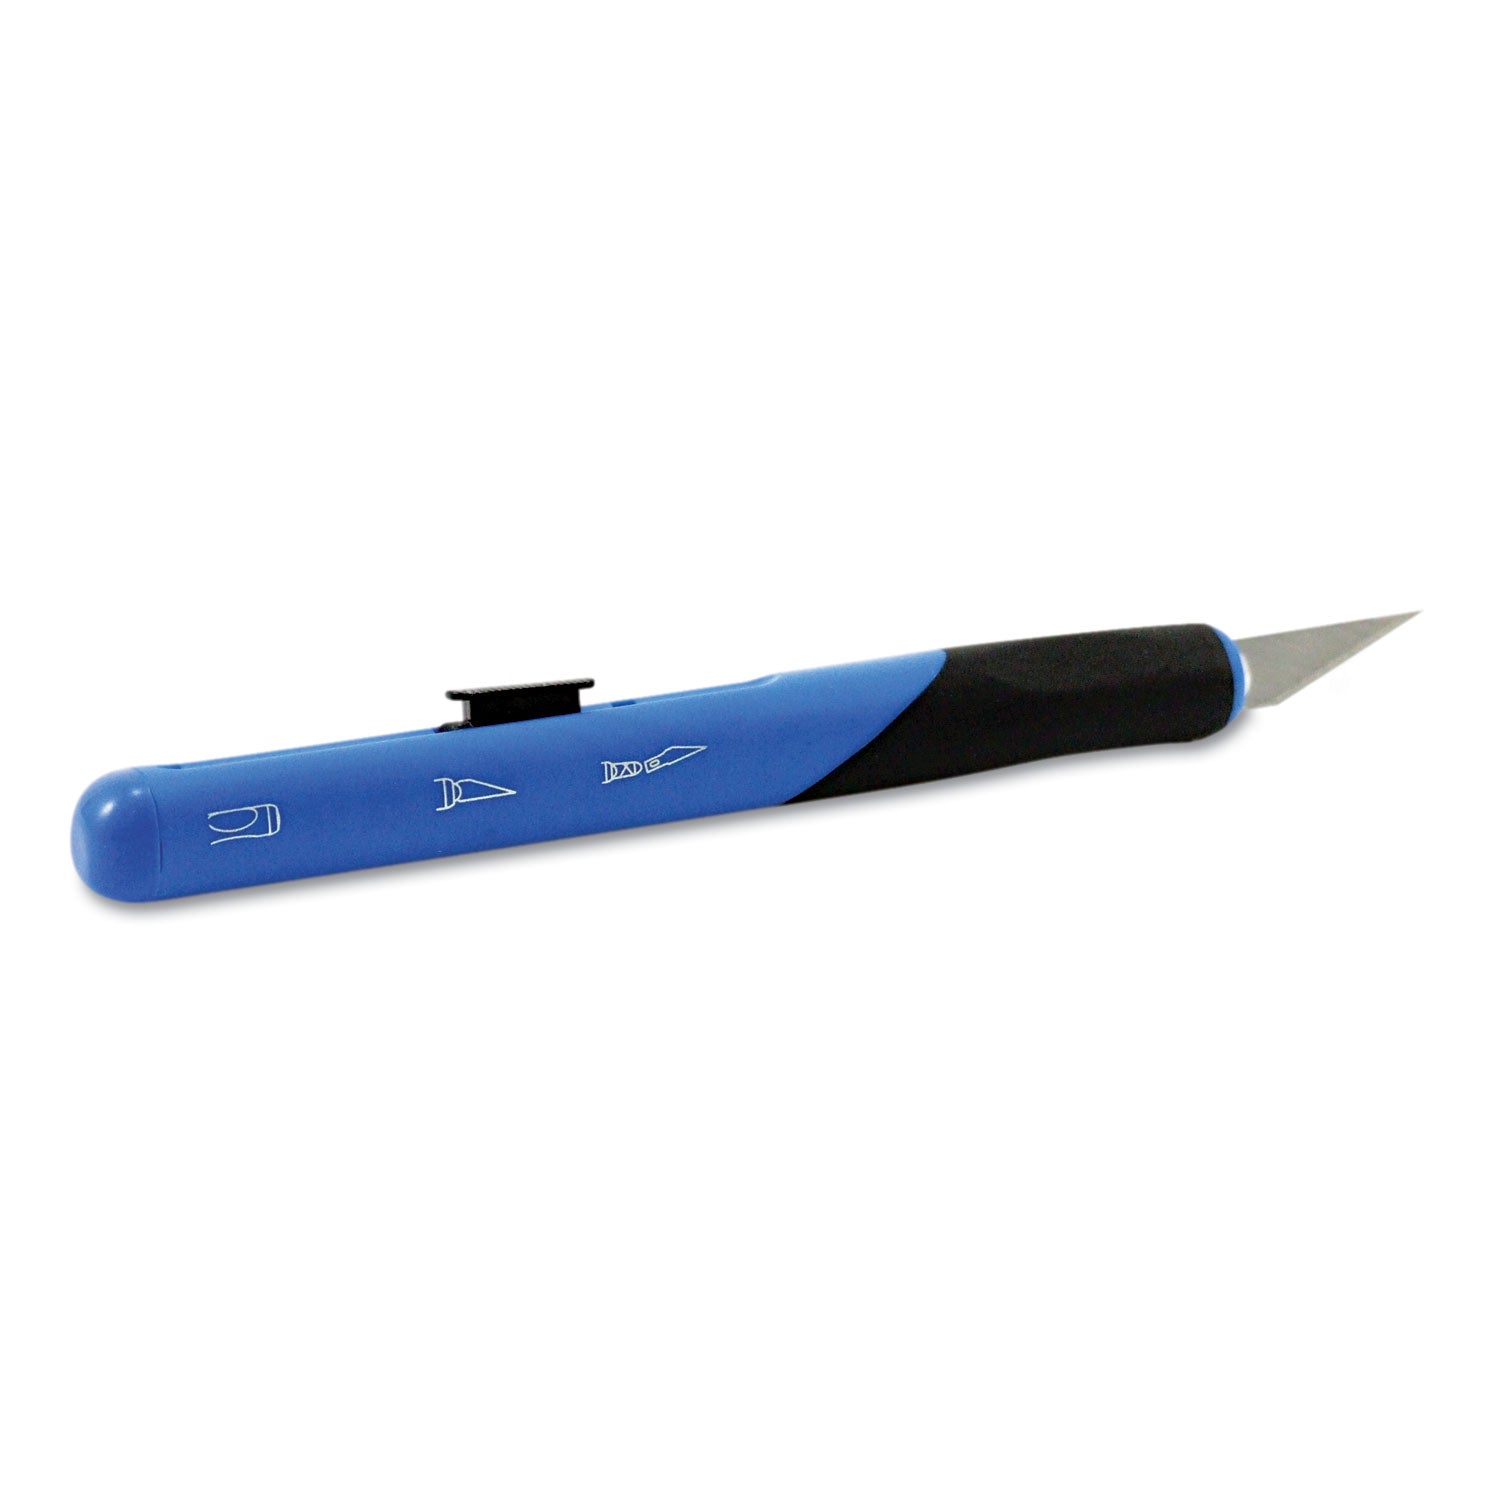 Retract-A-Blade Knife, #11 Blade, 5.25" Plastic Handle, Blue/Black - 